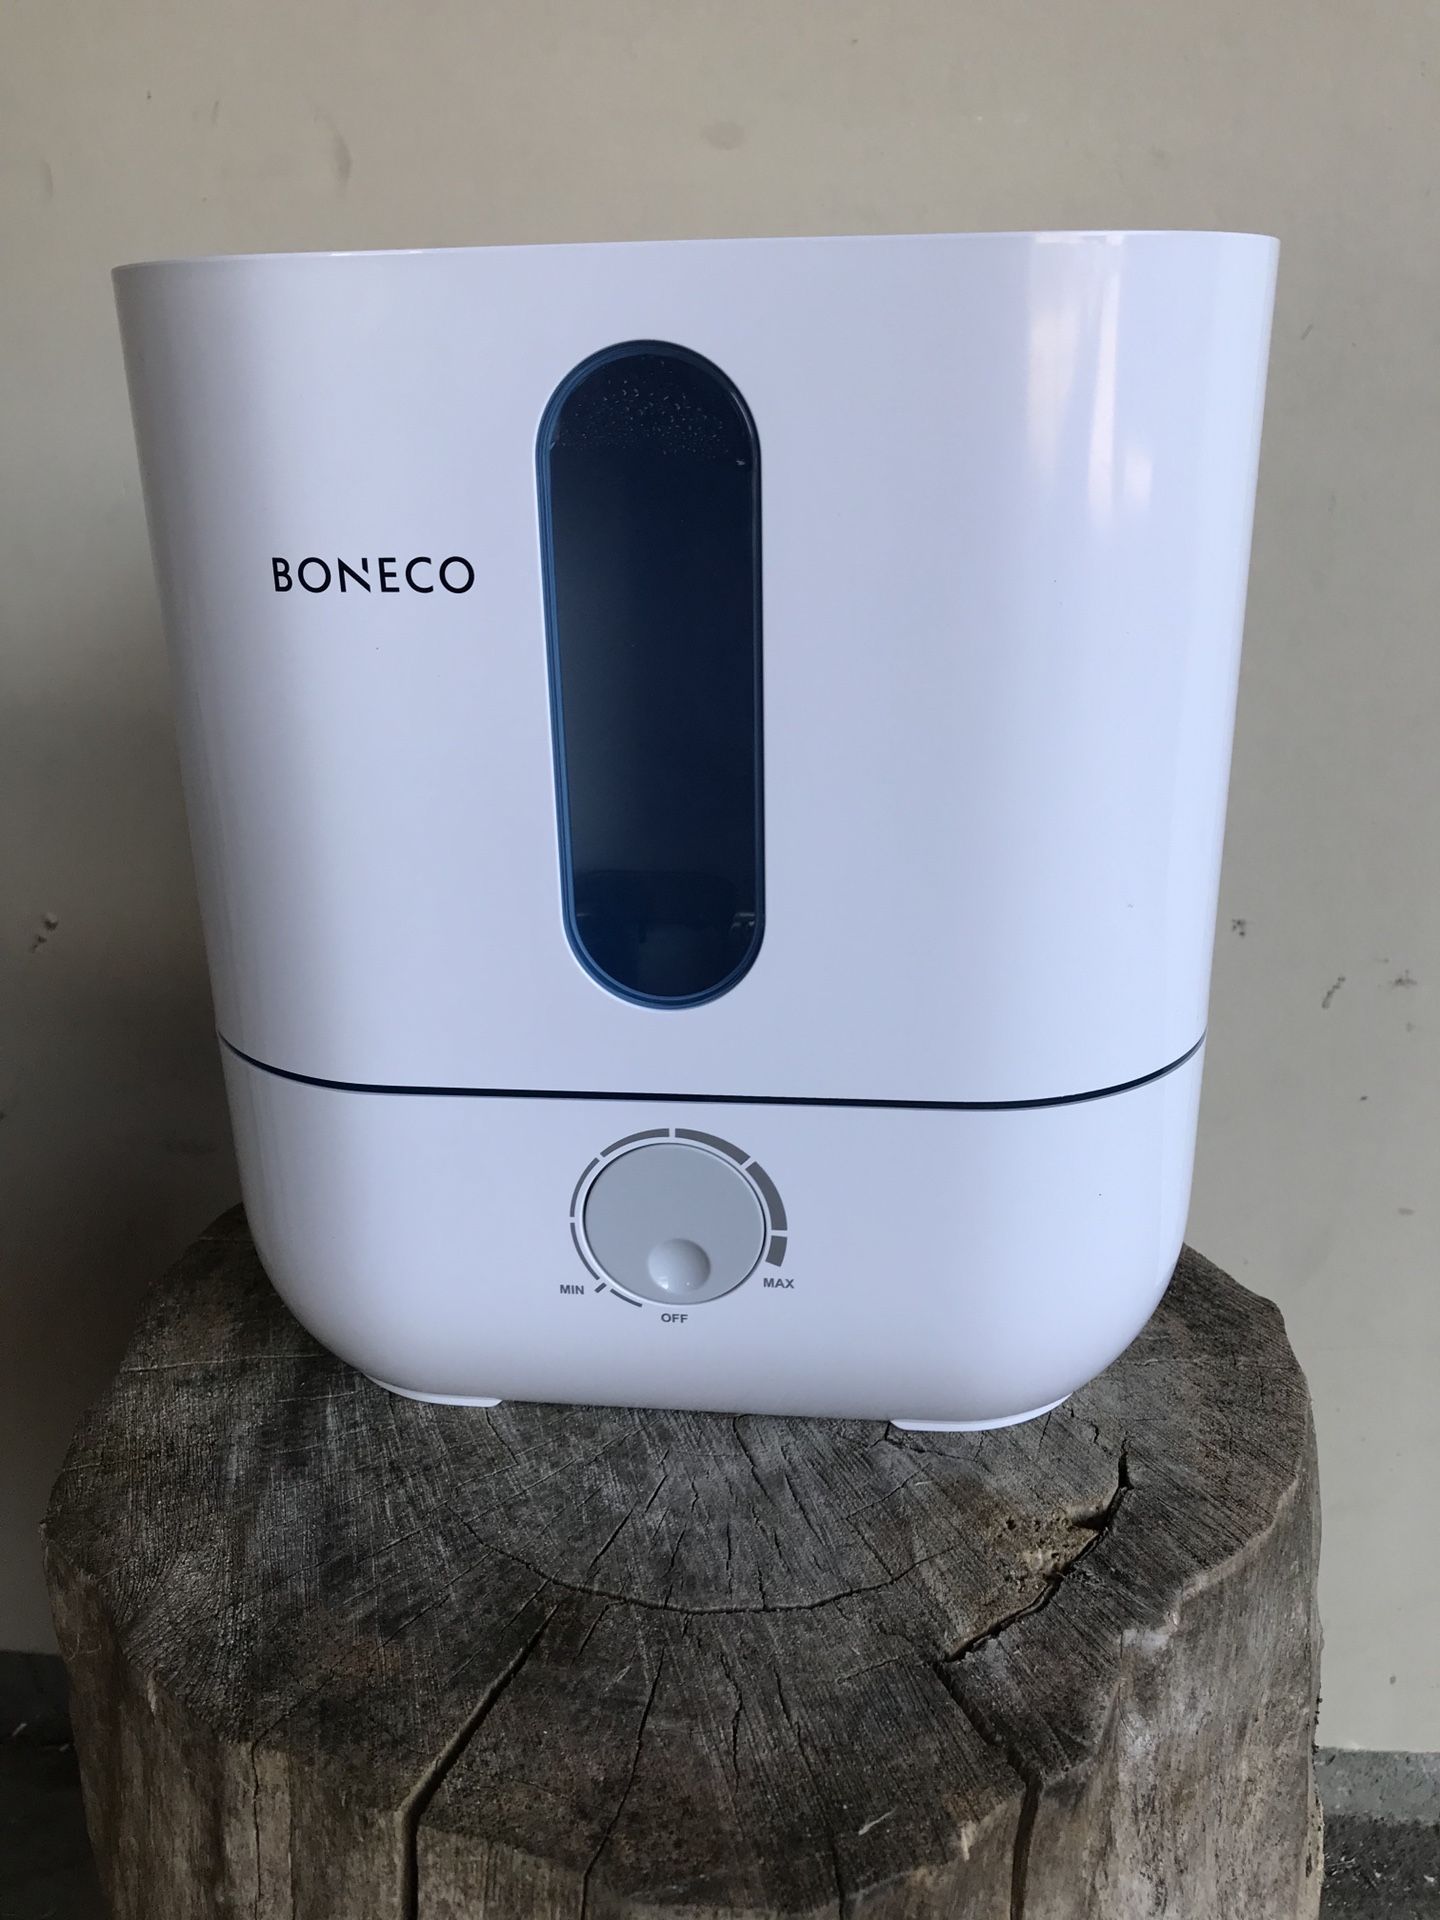 Boneco U200 humidifier